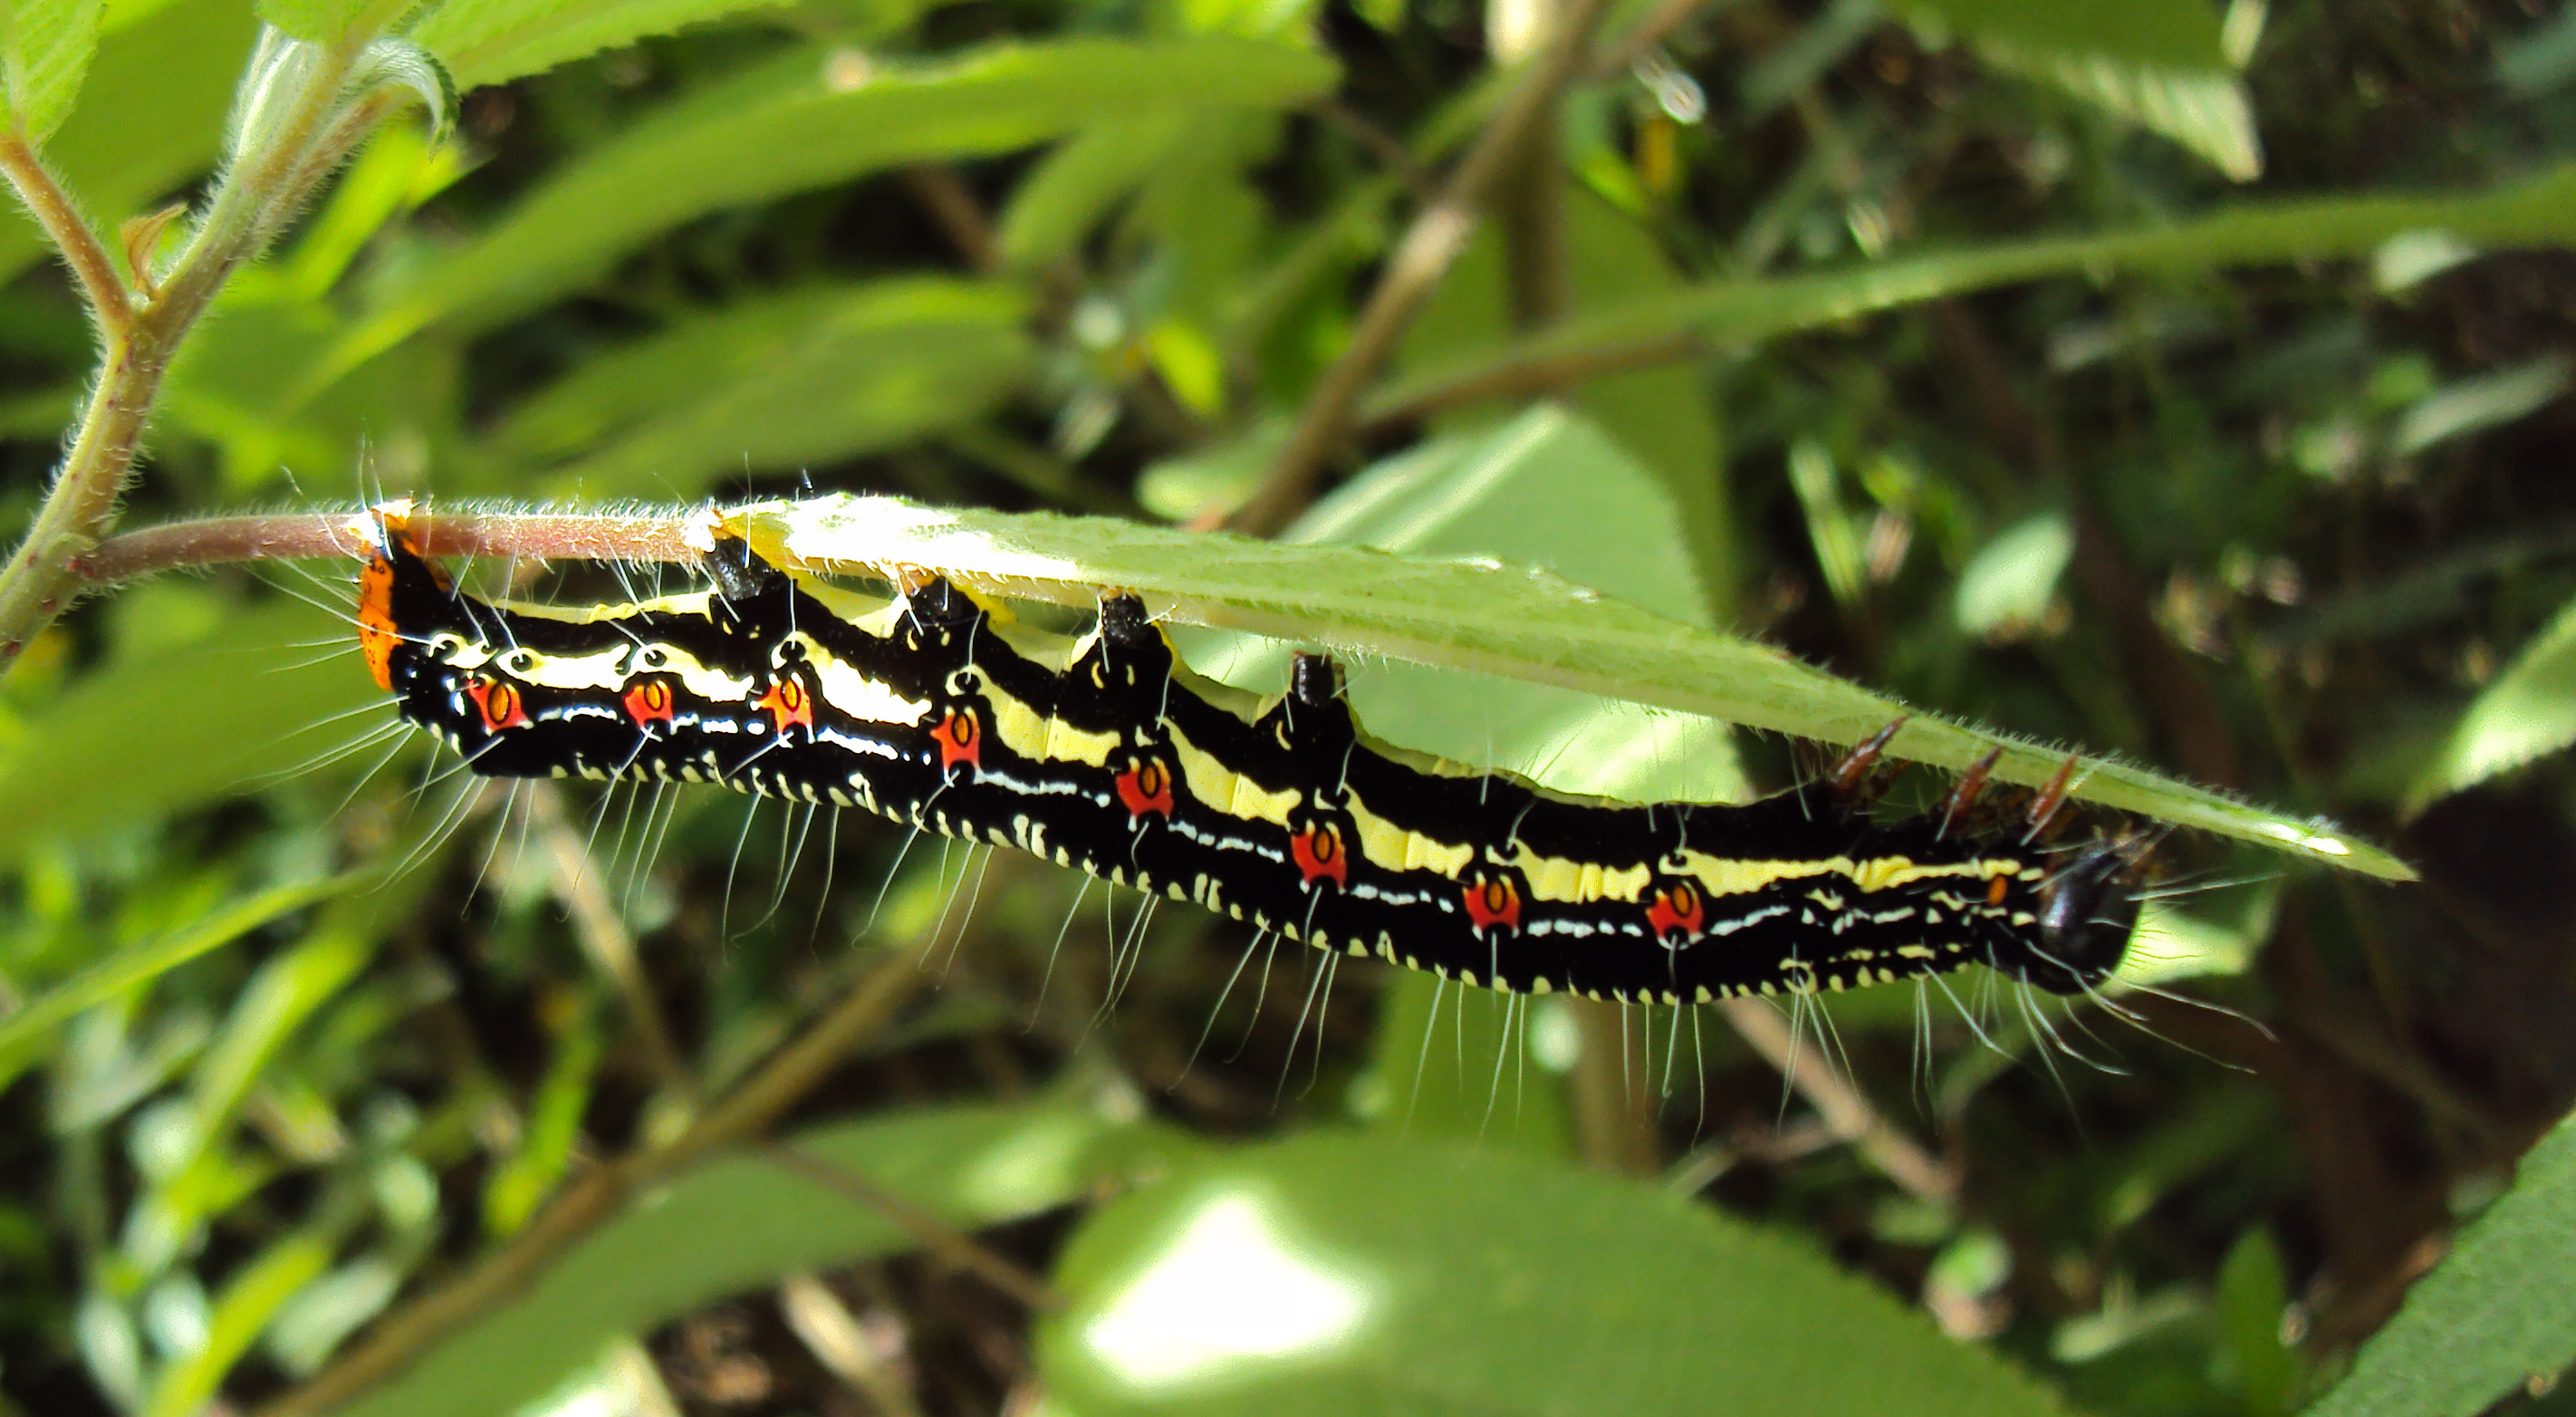 File:Arcte coerula caterpillar 01.JPG - Wikimedia Commons